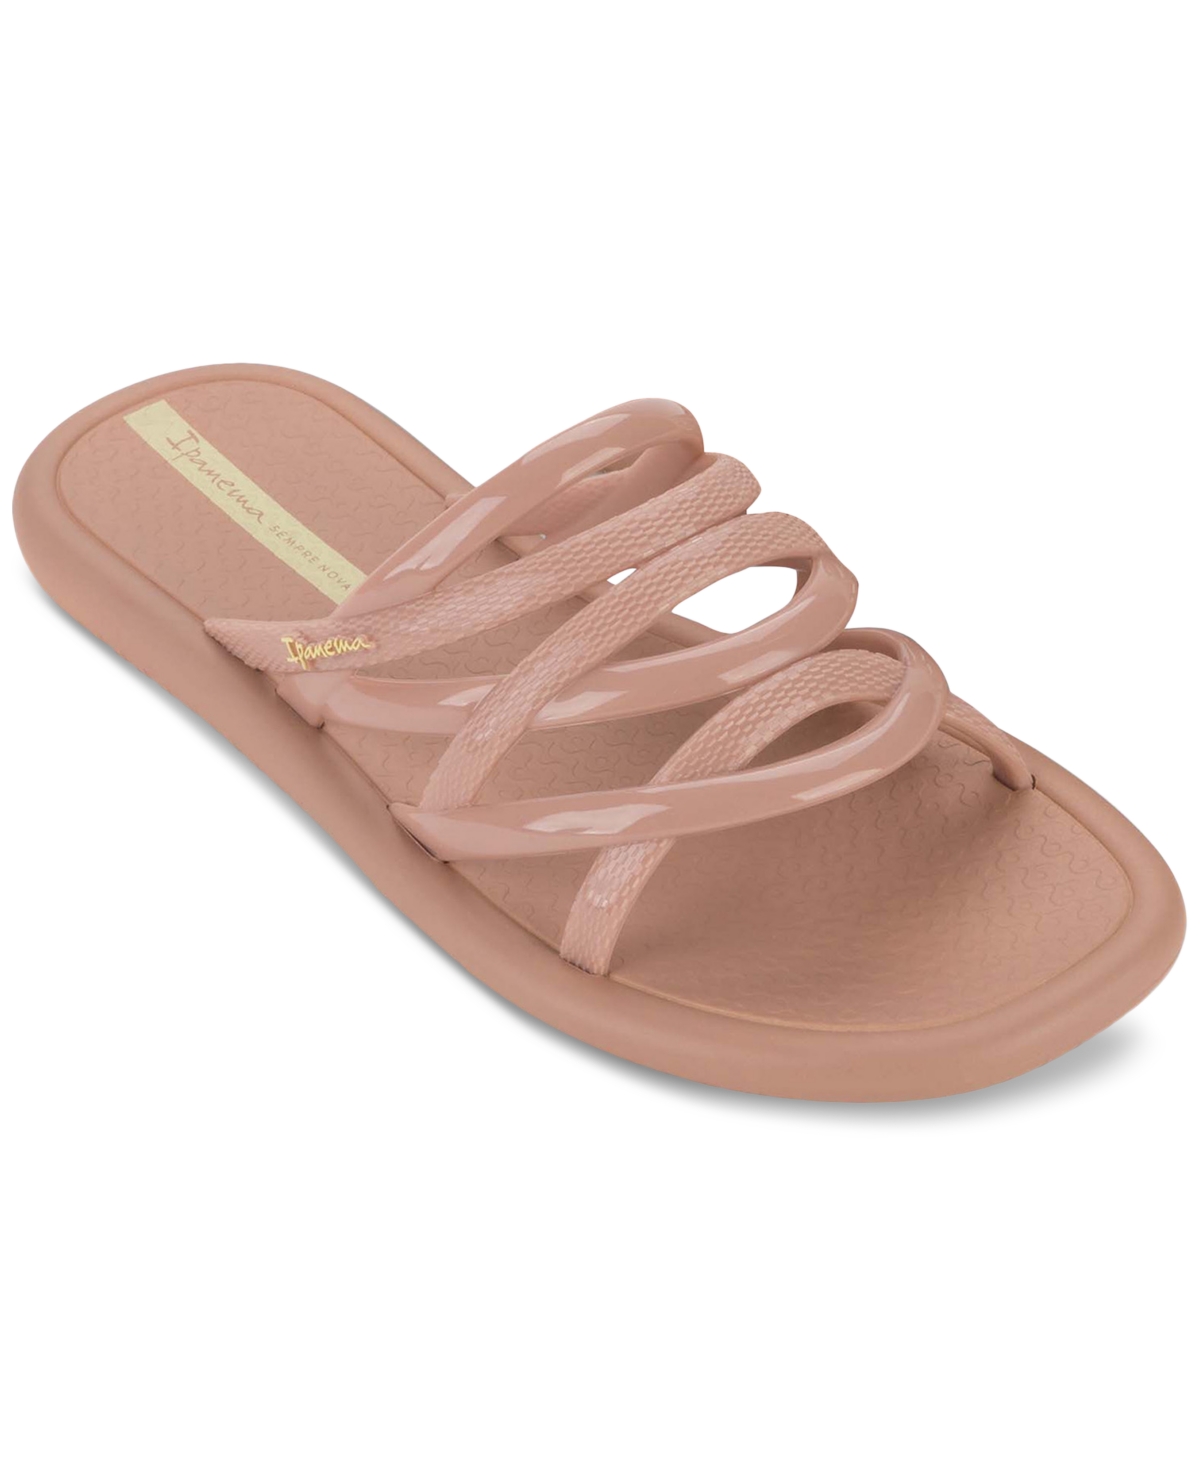 x Shakira Women's Sol Strappy Slide Sandals - Light Pink